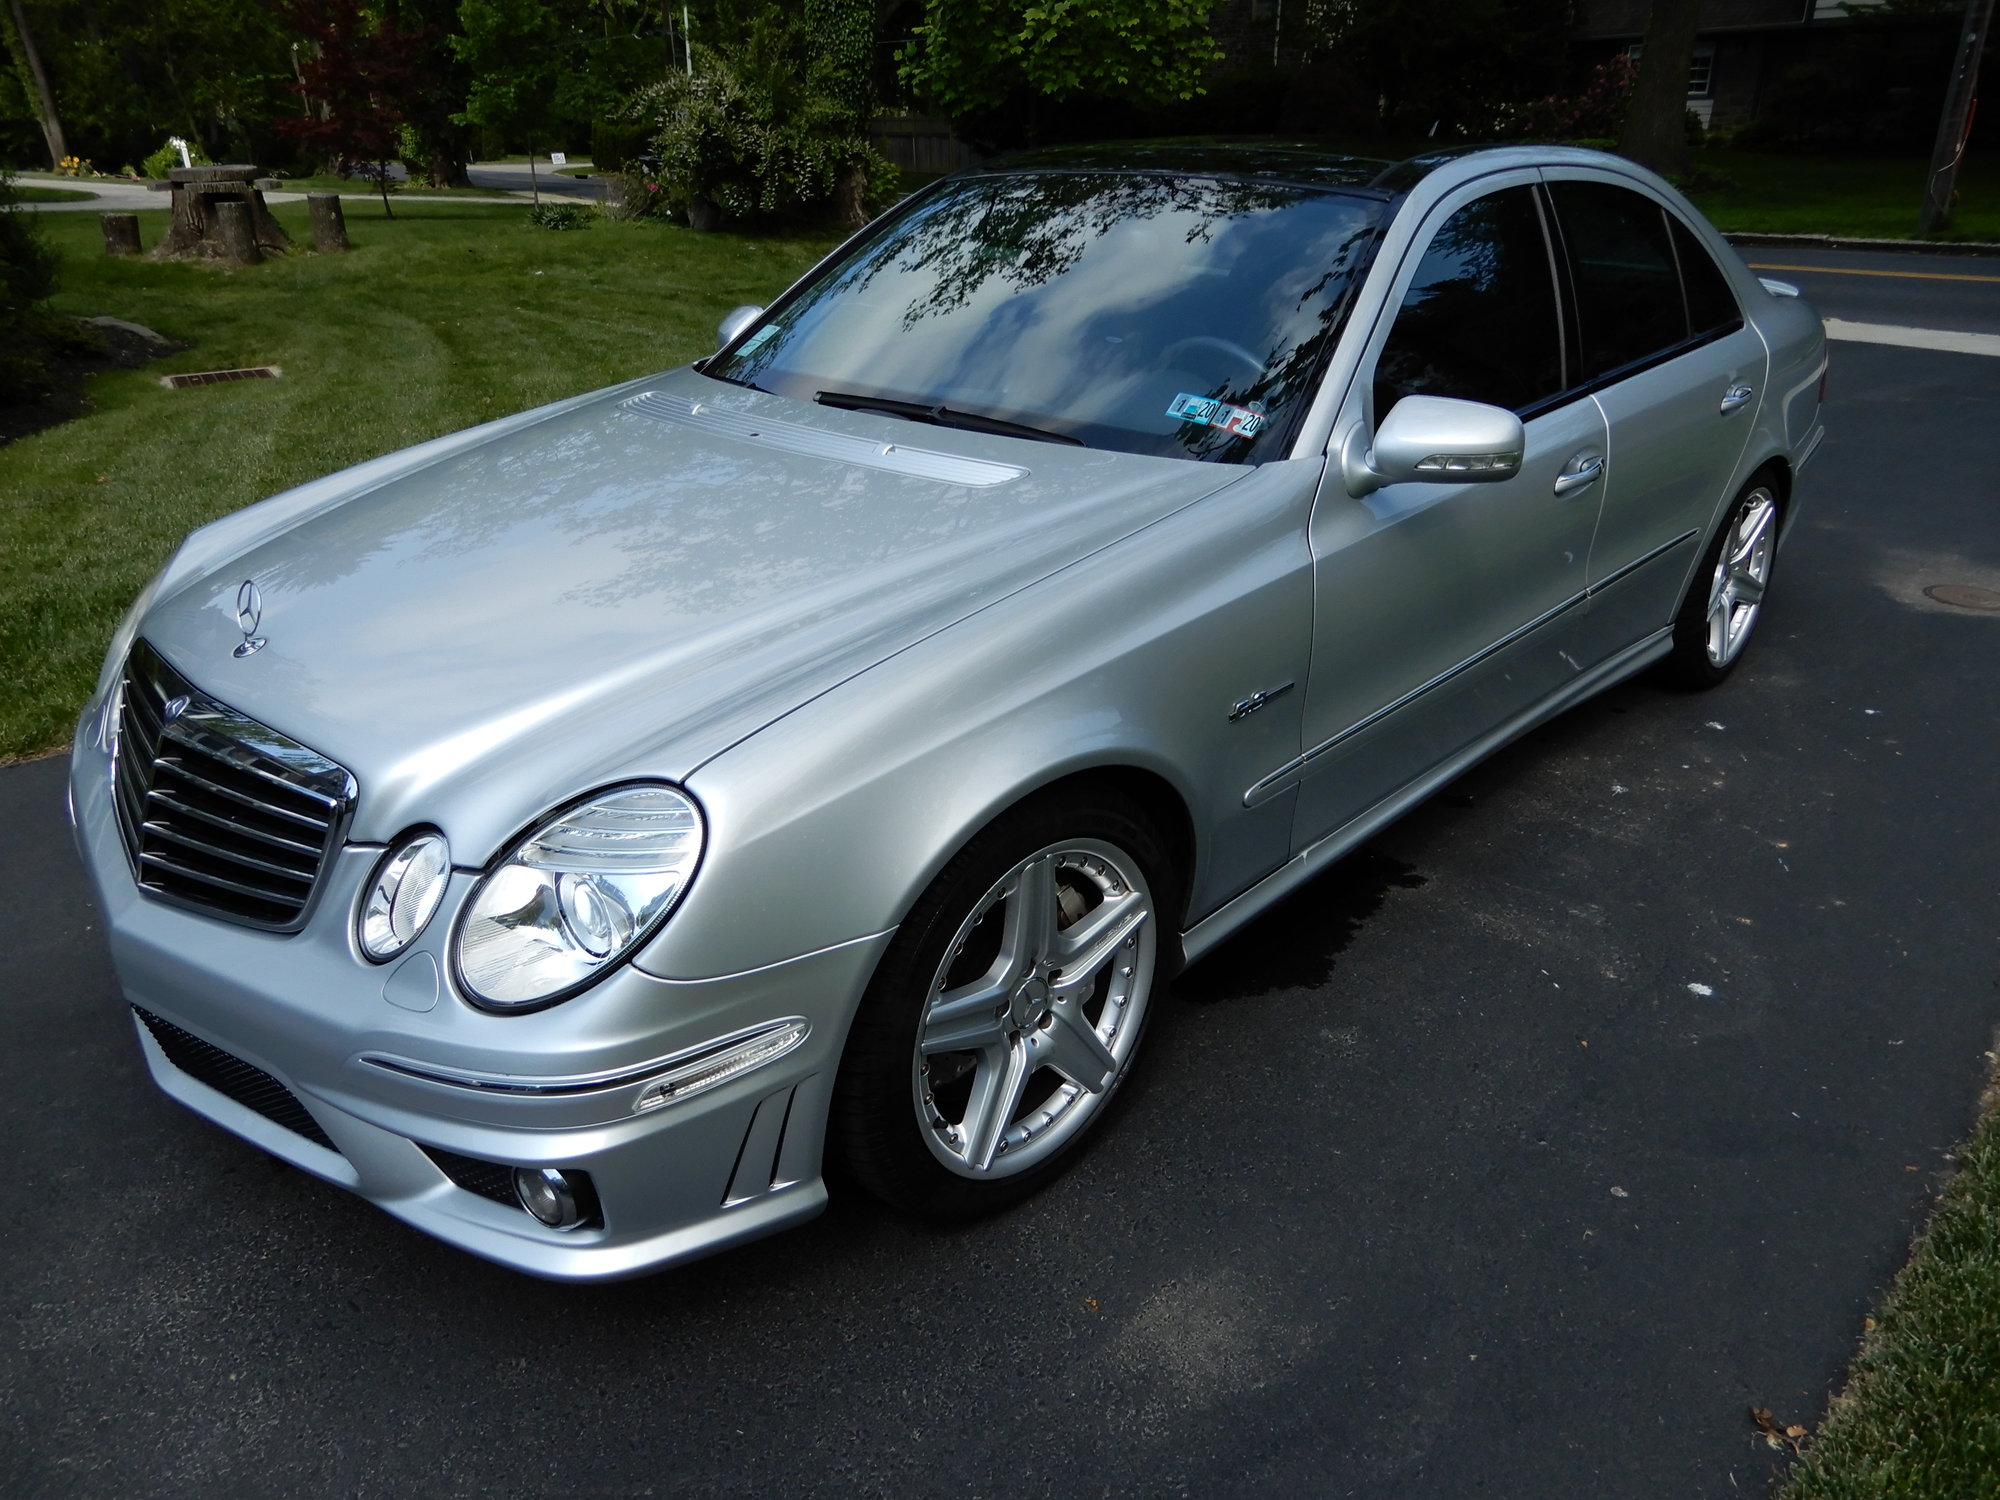 2007 Mercedes-Benz E63 AMG - Selling 2007 E63 AMG w/P030 - Used - VIN WDBUF77X97B158376 - 85,946 Miles - 8 cyl - 2WD - Automatic - Sedan - Silver - Philadelphia, PA 19096, United States